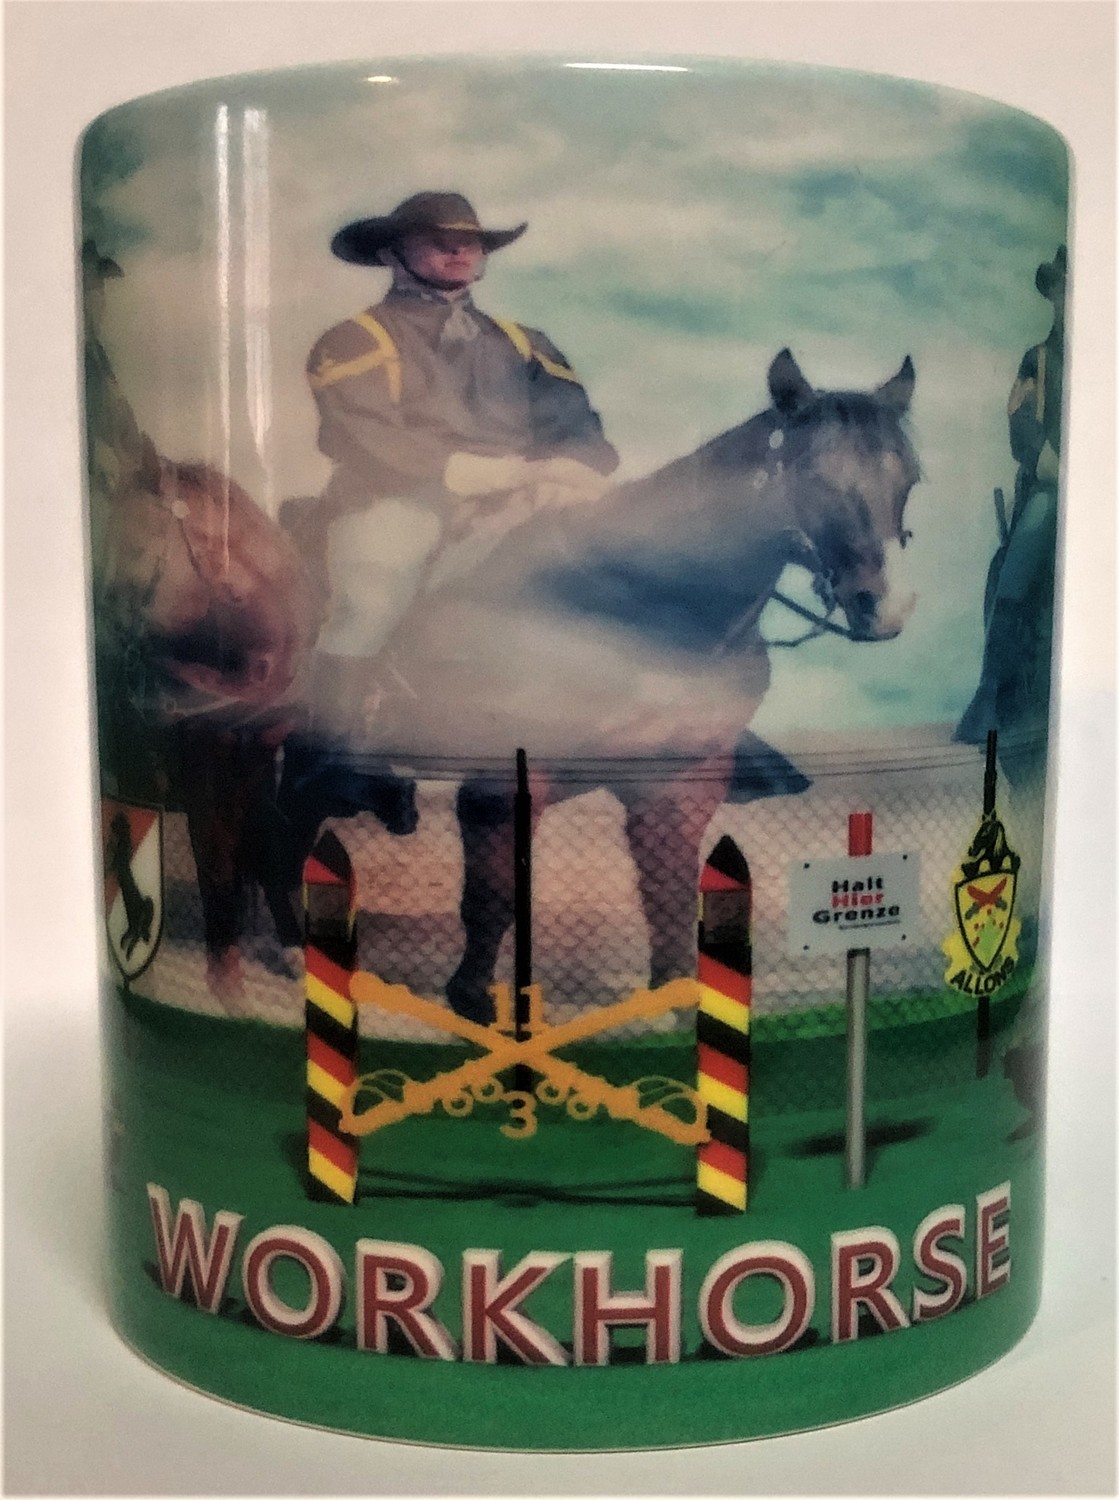 11TH ACR 3RD SQUADRON Workhorse Border Coffee Mugs